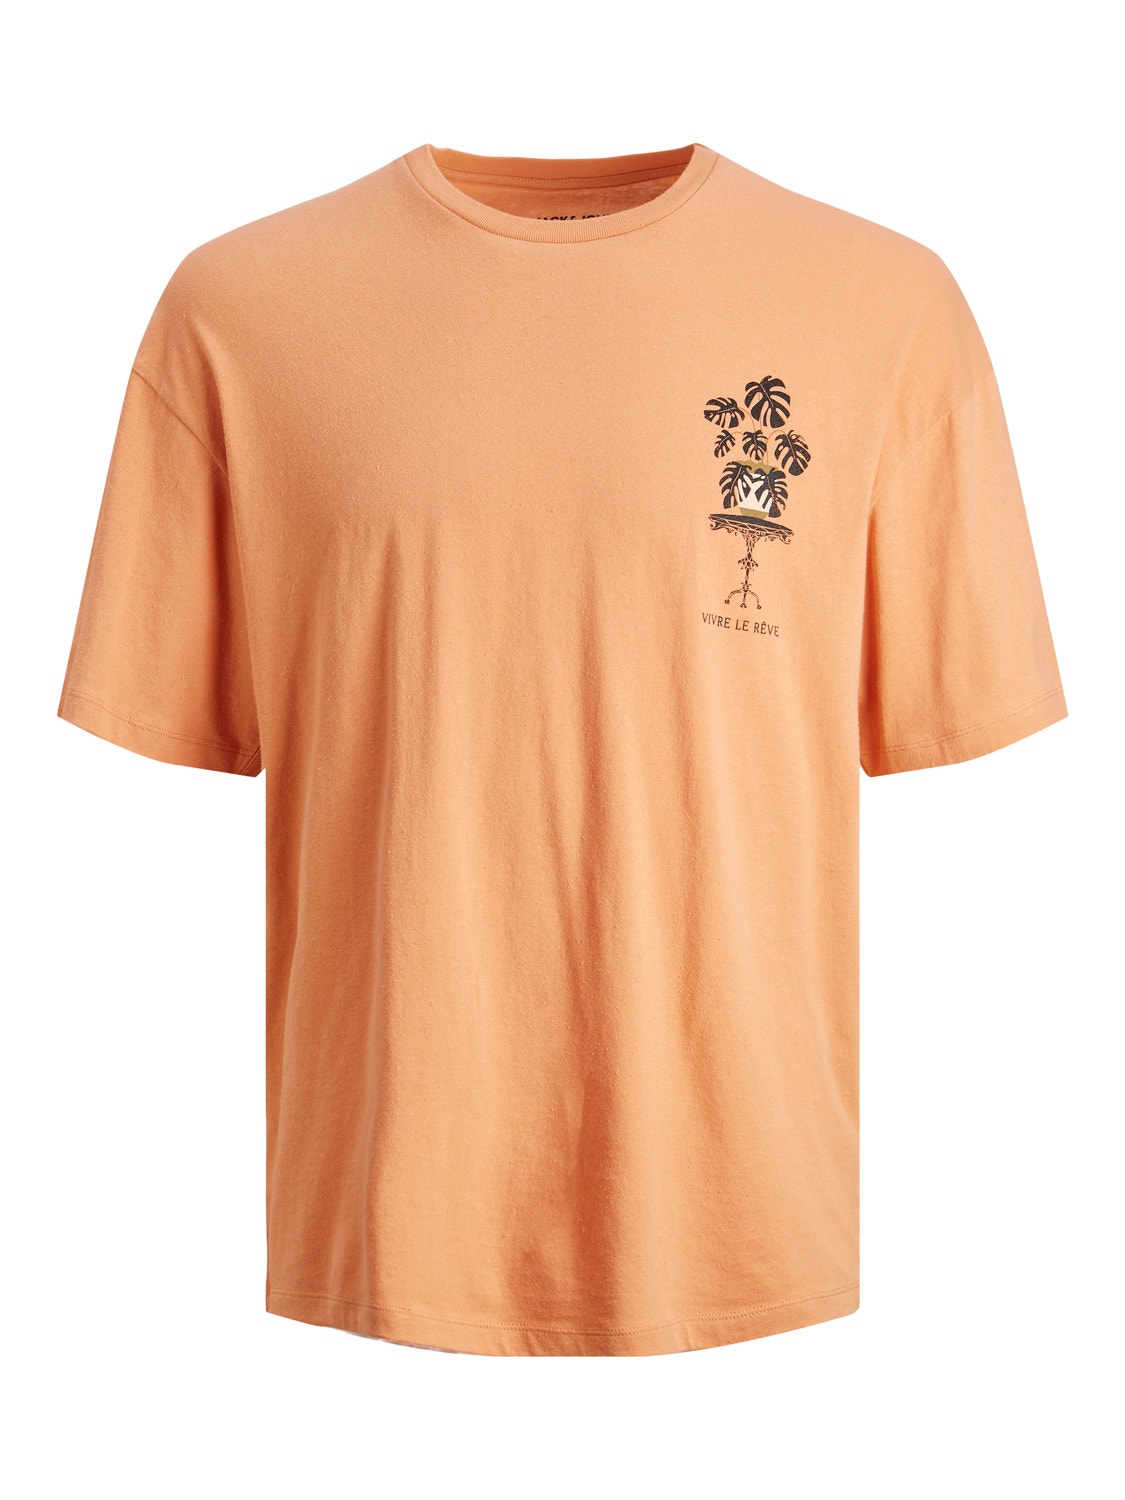 Jack & Jones Gedruckt Rundhals T-shirt -Copper Tan - 12245262